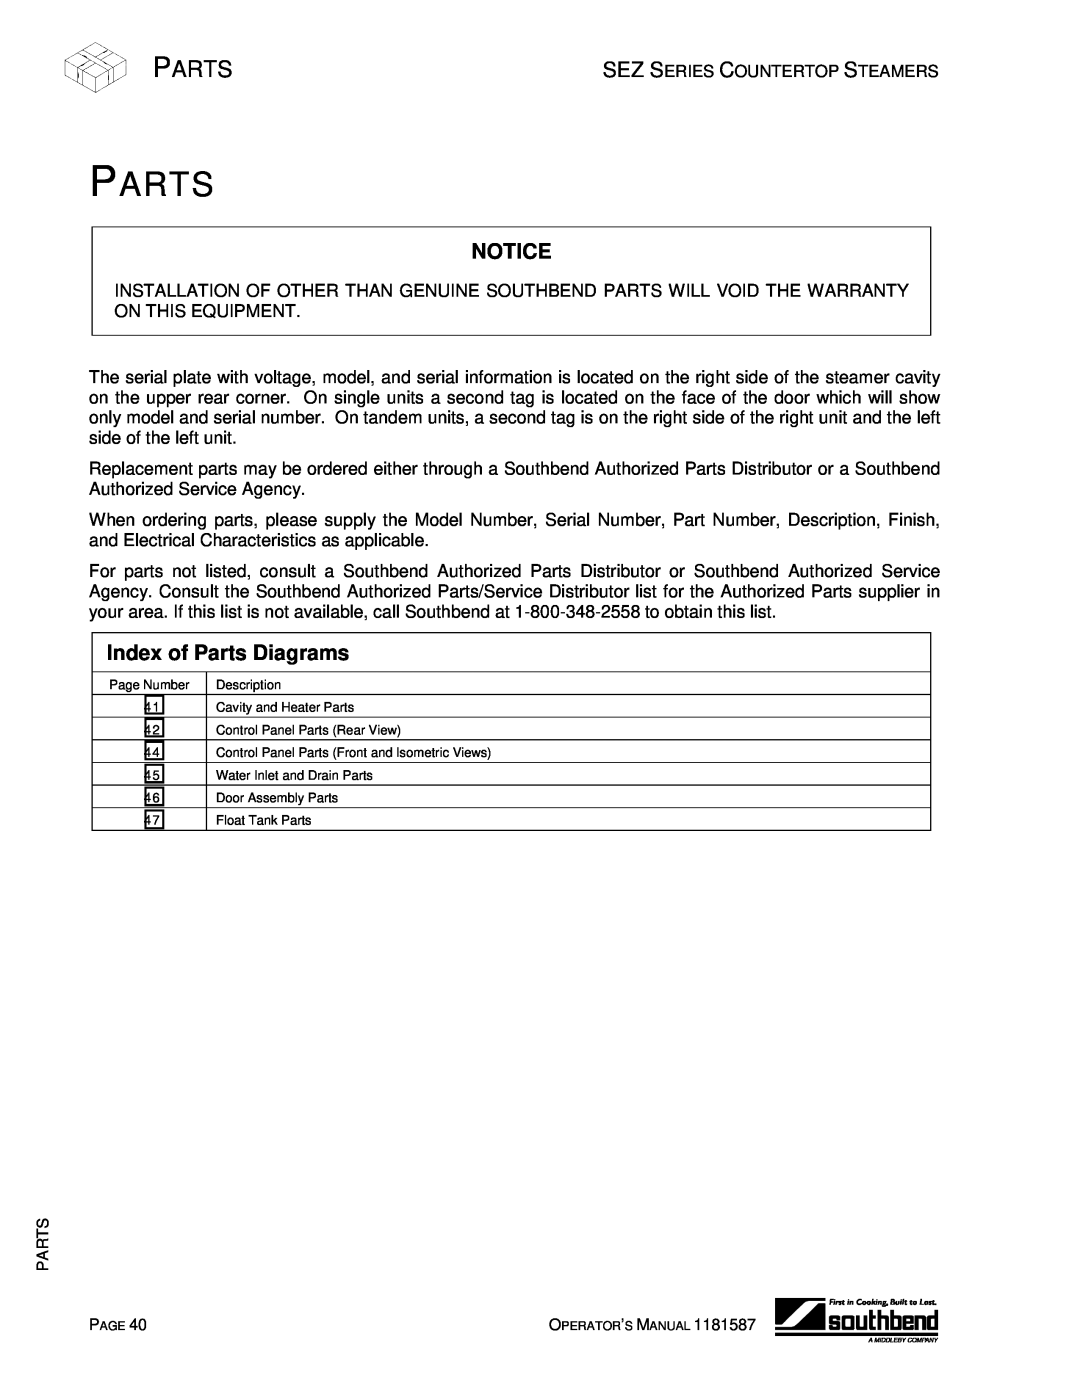 Southbend SEZ-5, SEZ-3 manual Index of Parts Diagrams 